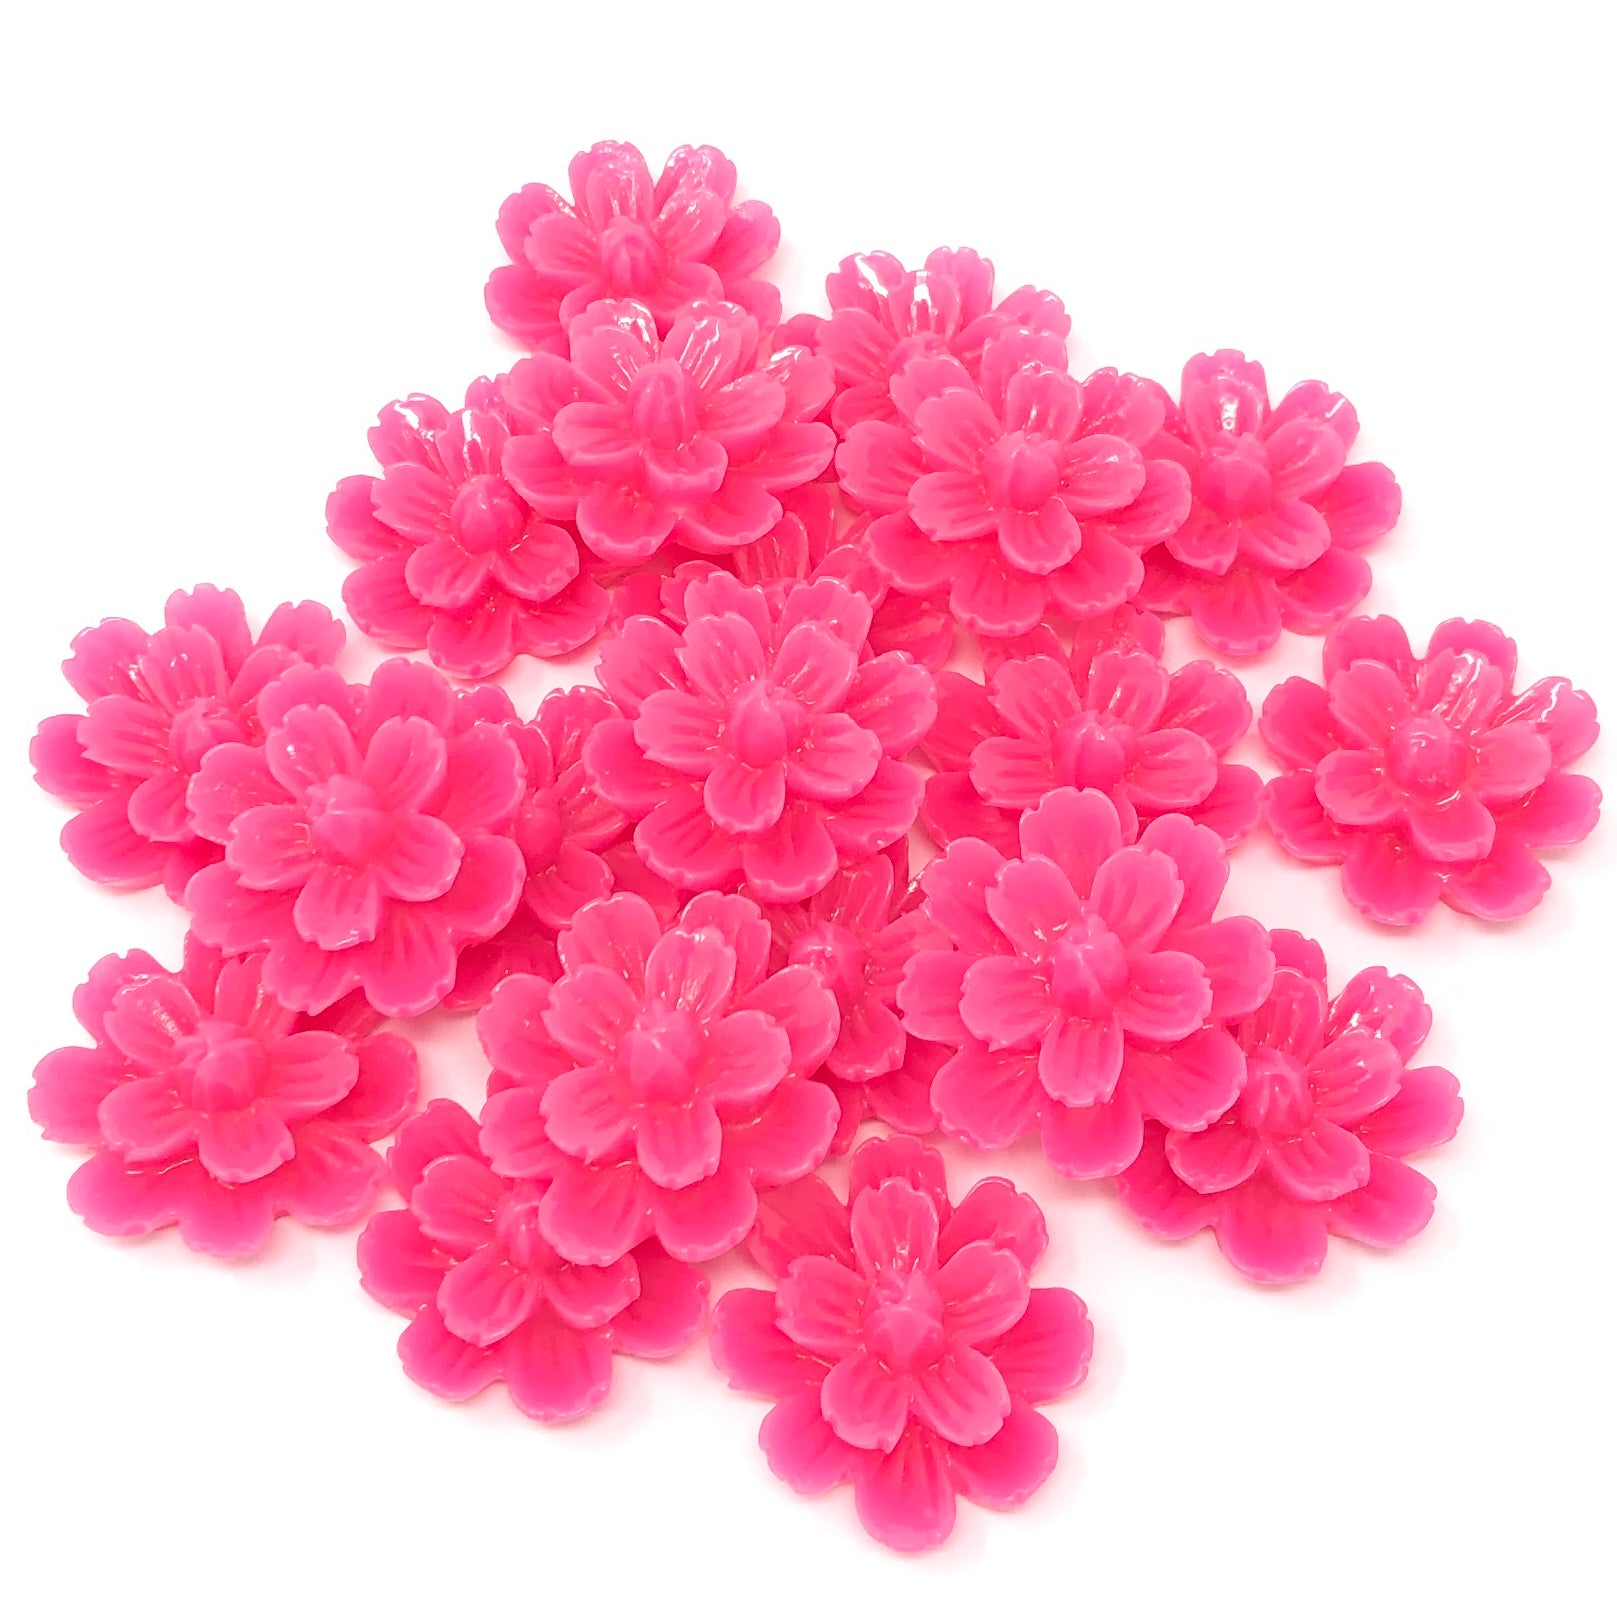 Pink 20mm Resin Flower Flatbacks - Pack of 20